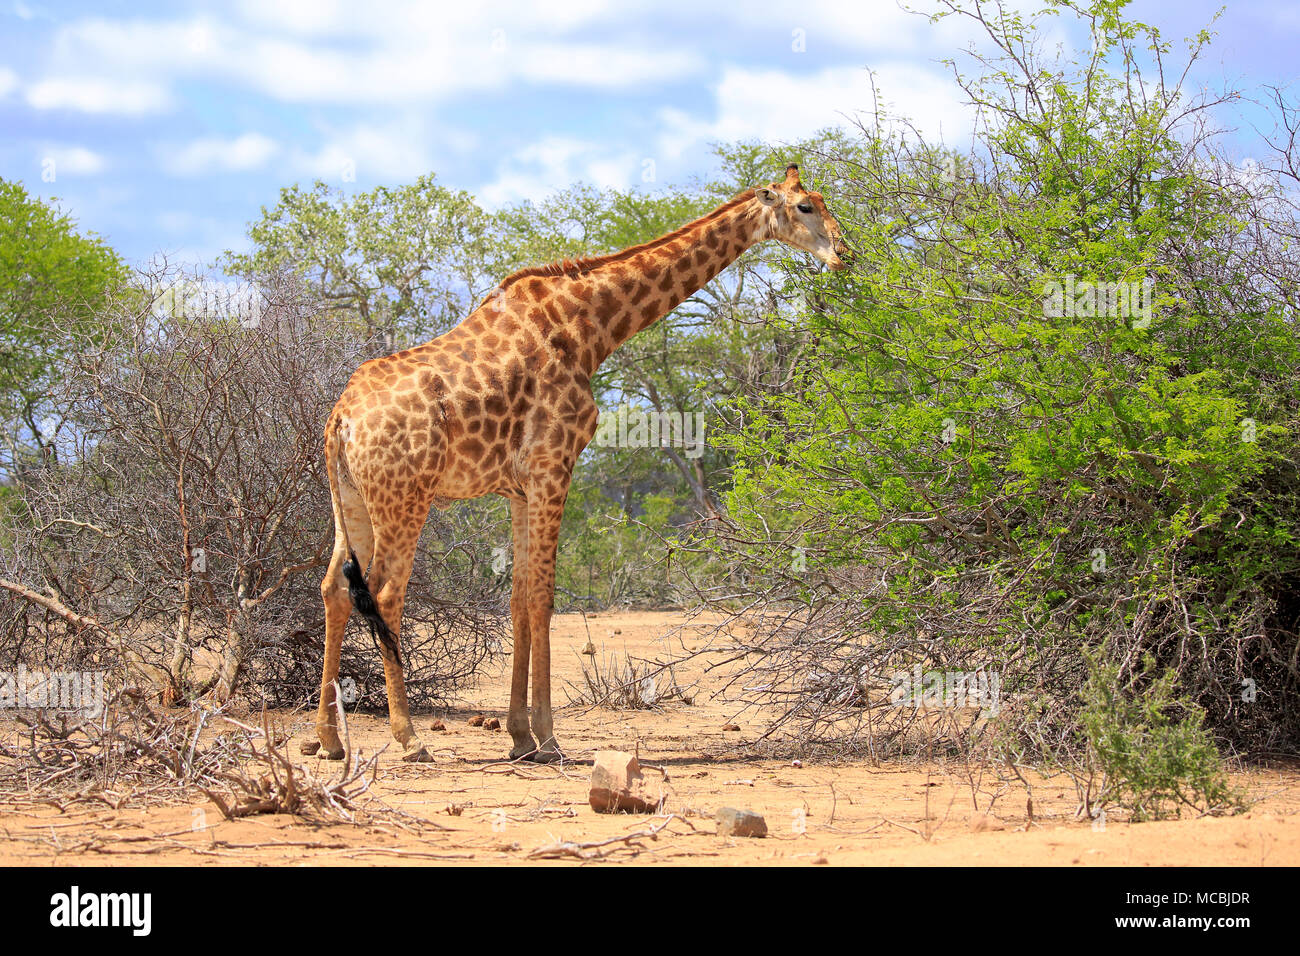 Southern giraffe (Giraffa camelopardalis giraffa), adult, eating, feeding, Kruger National Park, South Africa Stock Photo